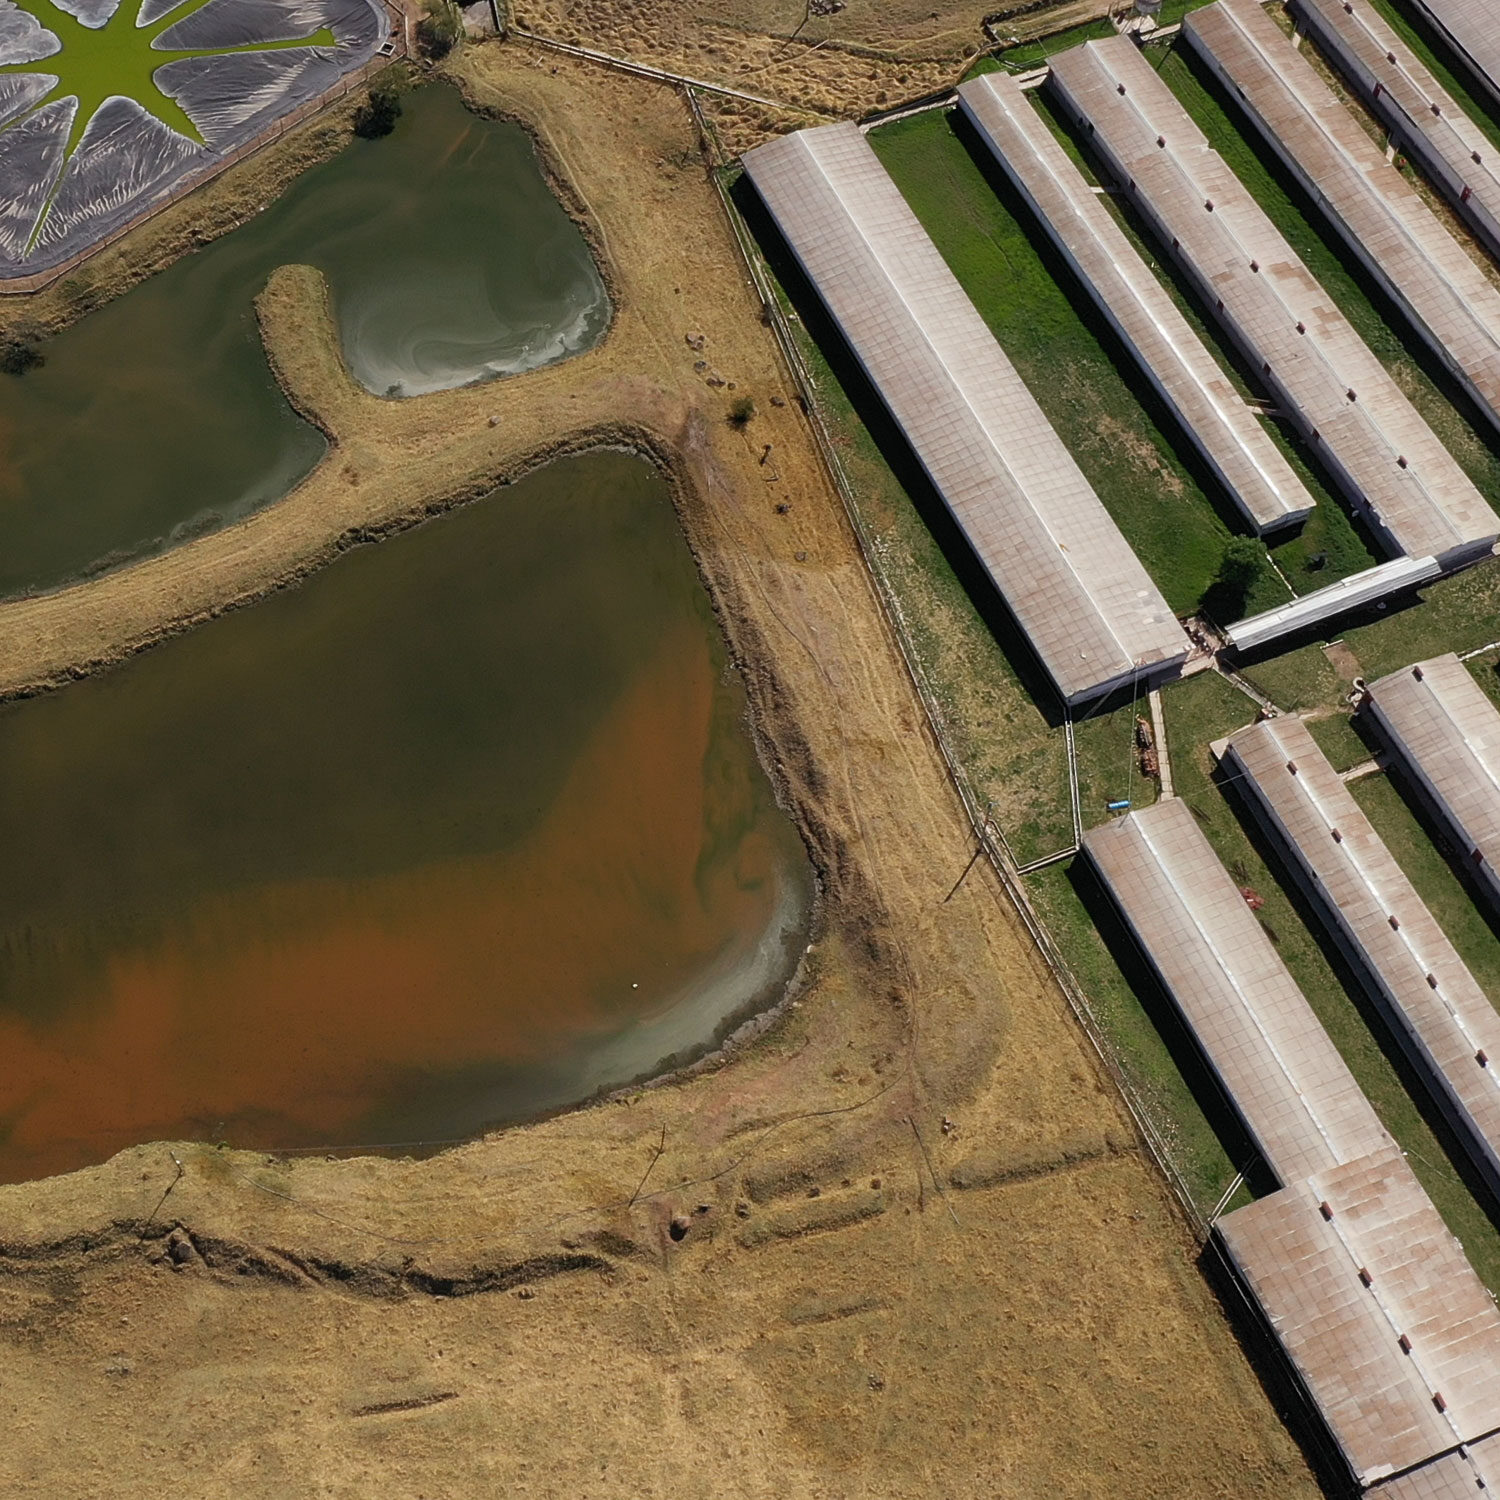 Ariel view of sewage lagoon on pig farm